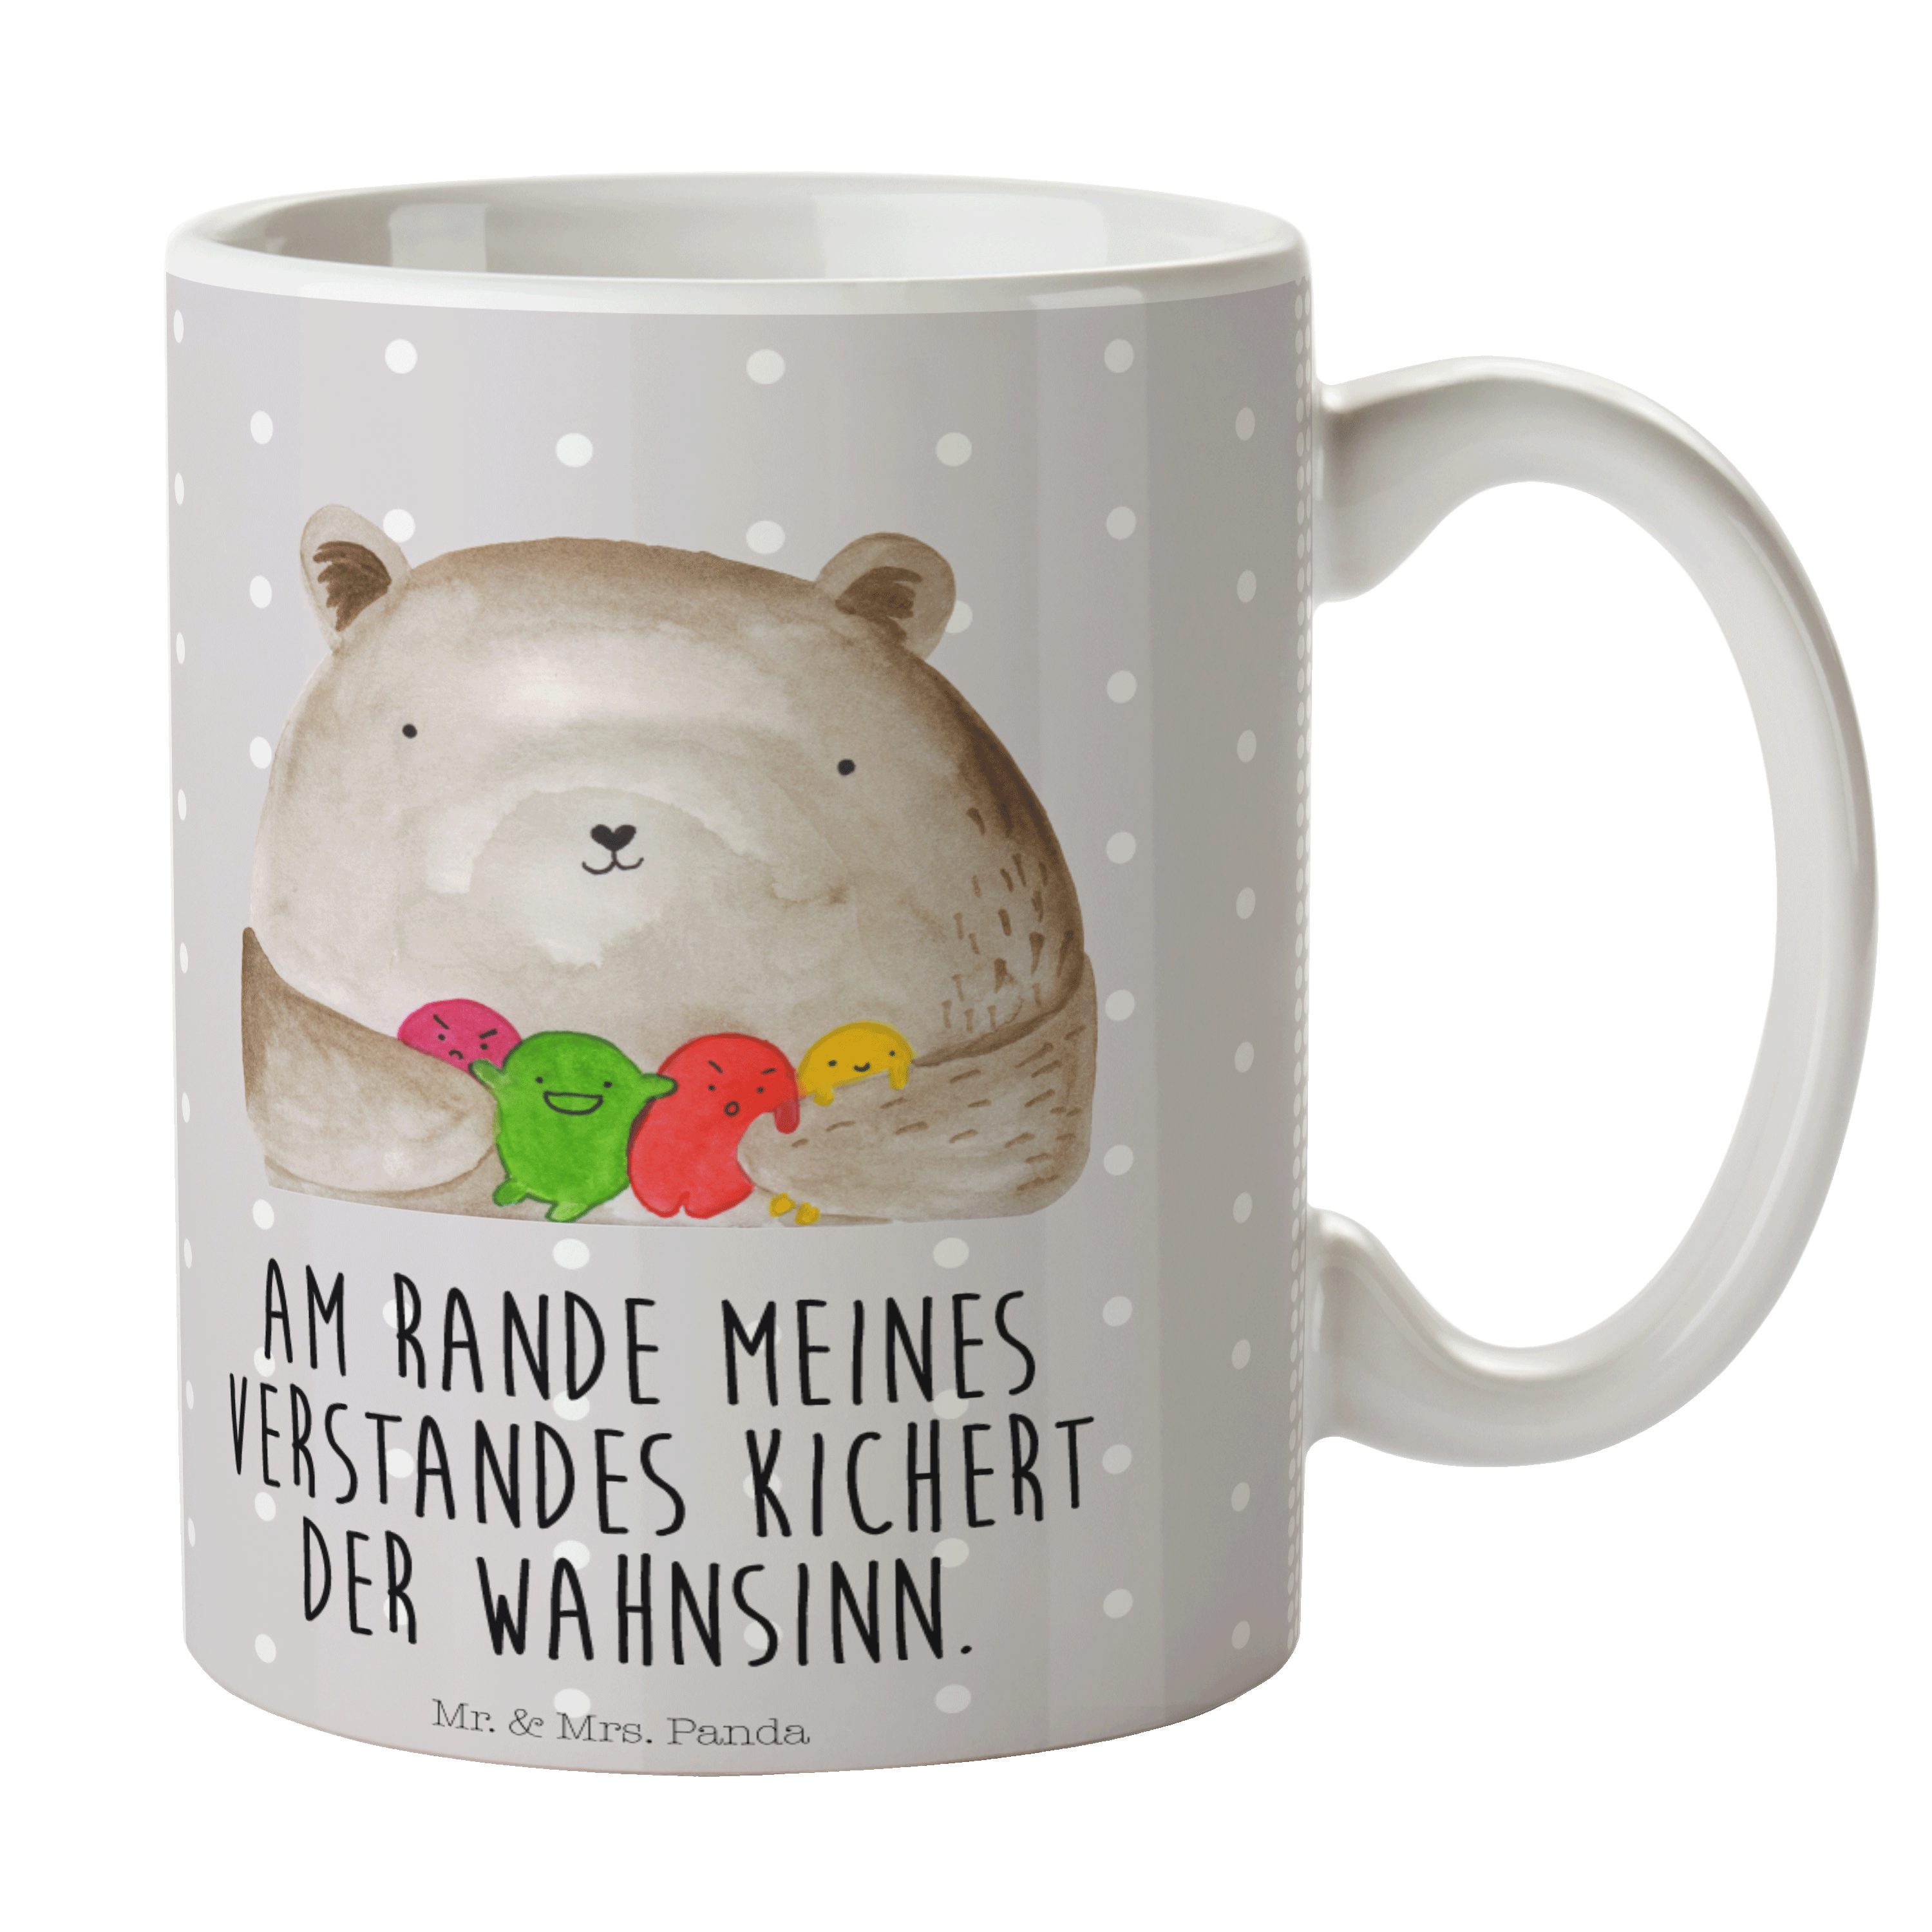 Mr. & Mrs. Panda Tasse Bär Gefühl - Grau Pastell - Geschenk, Teebecher, Teddy, Keramiktasse, Keramik